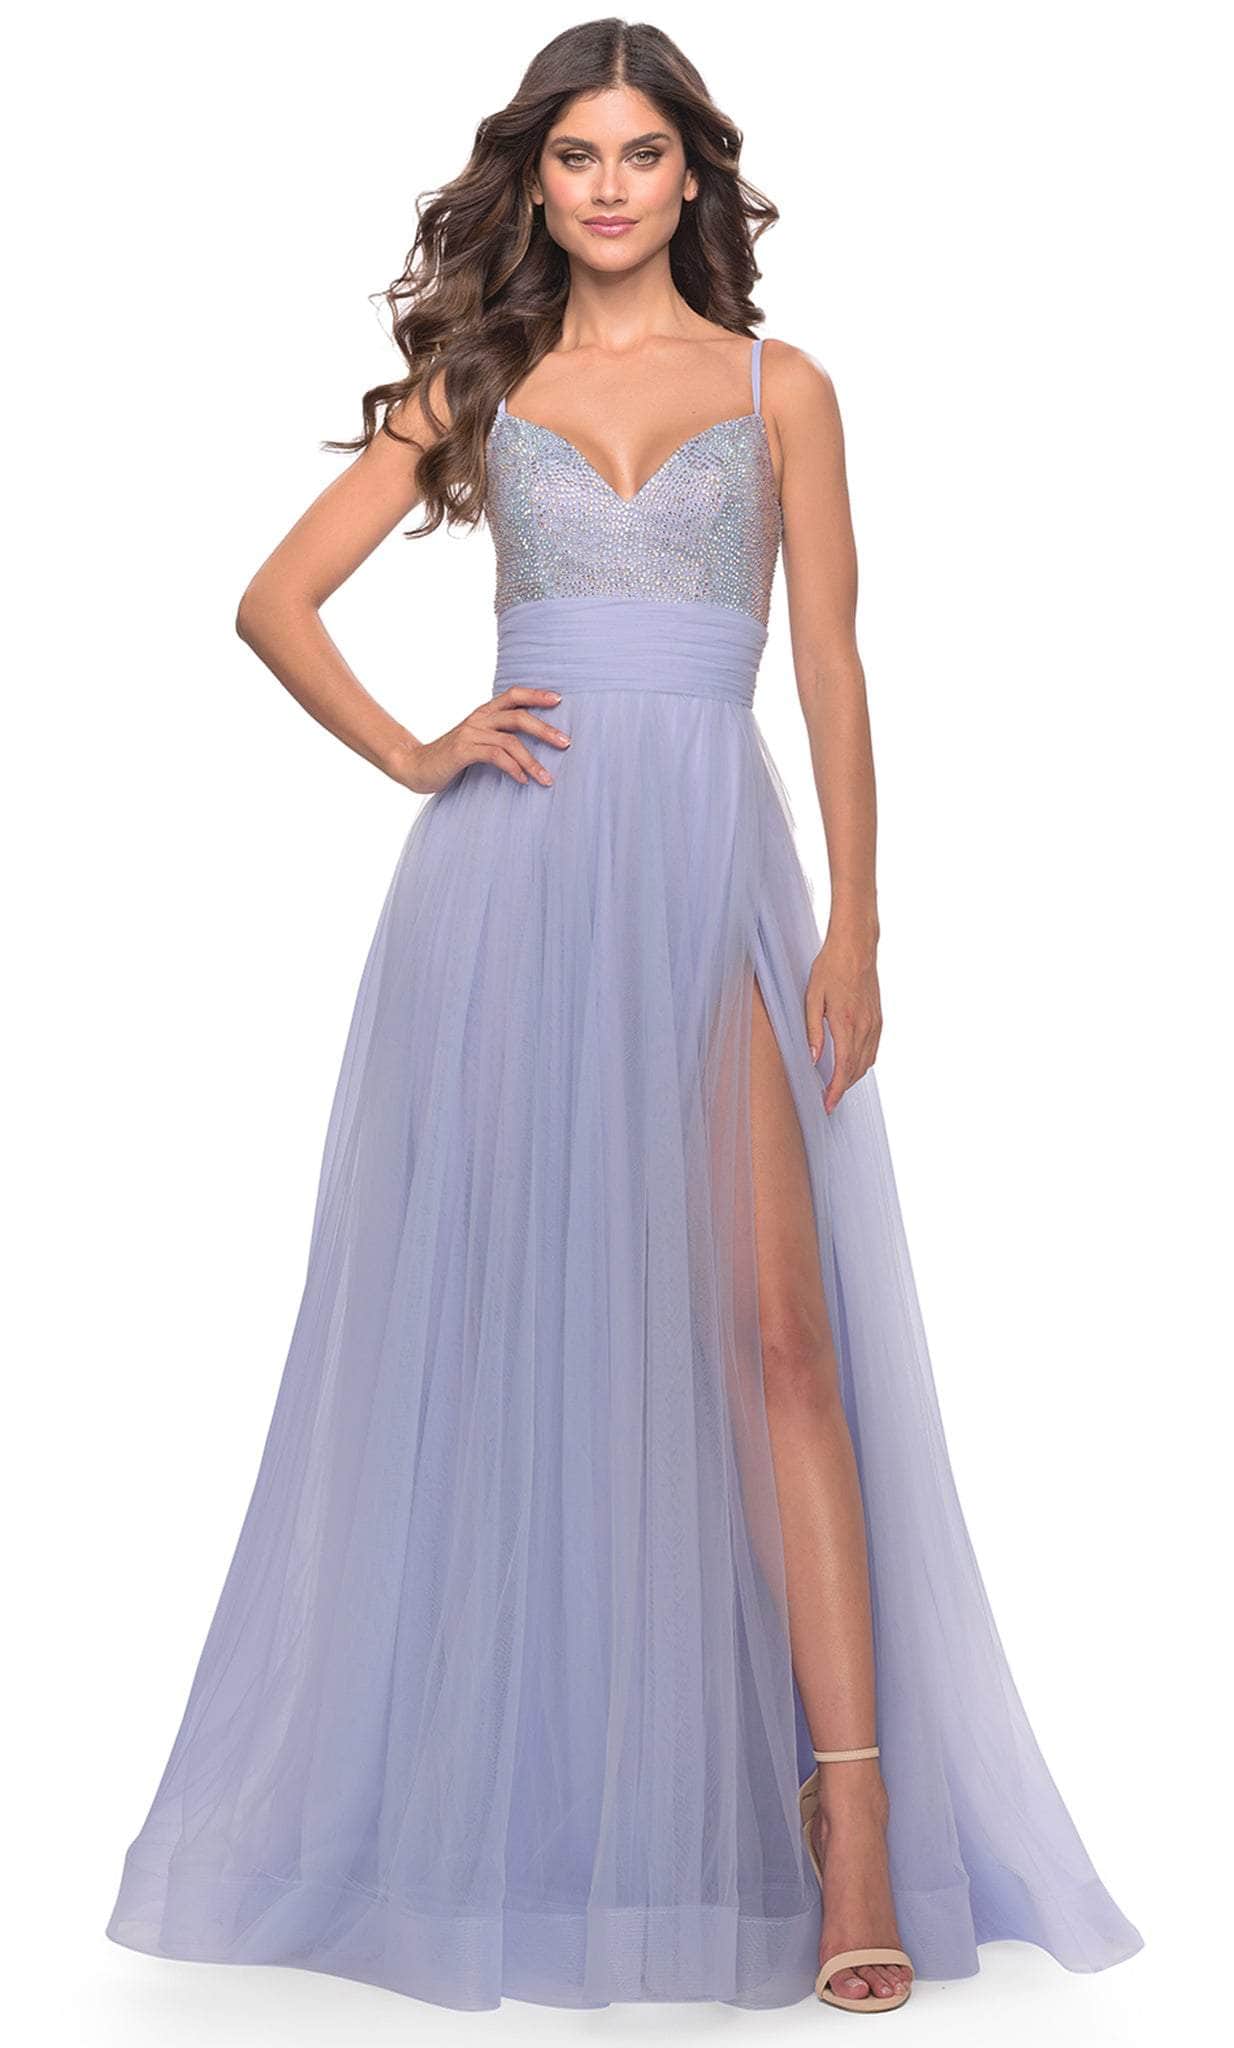 Image of La Femme 31433 - Sleeveless Stone Accent Prom Dress